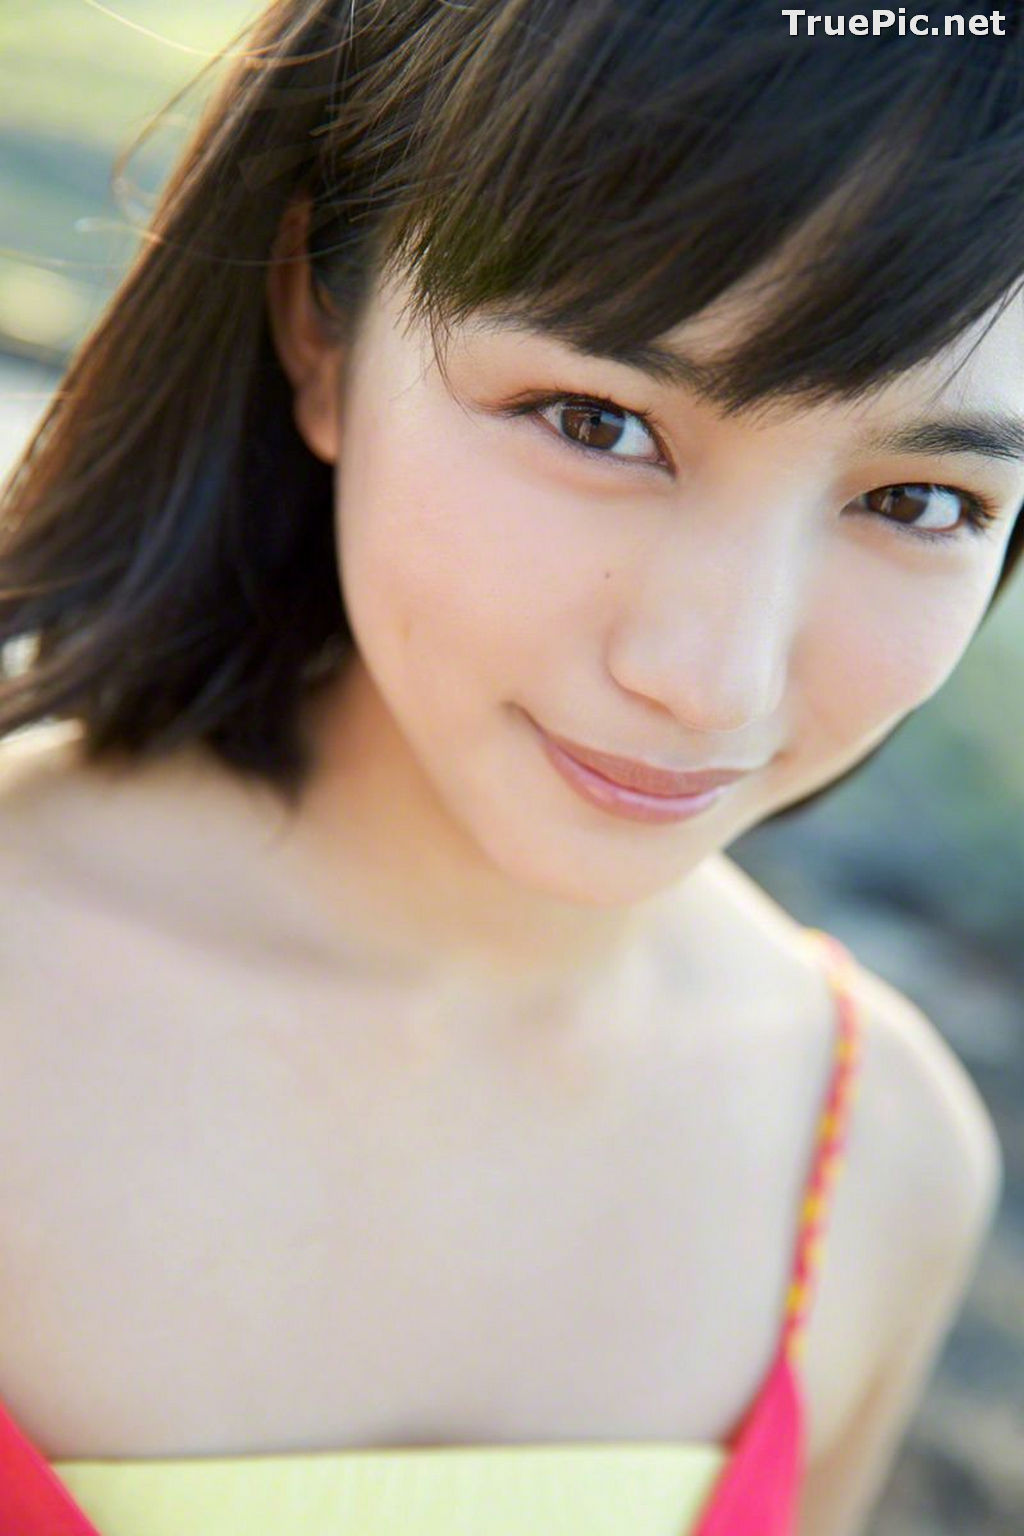 Image Wanibooks No.132 - Japanese Actress and Gravure Idol - Haruna Kawaguchi - TruePic.net - Picture-64